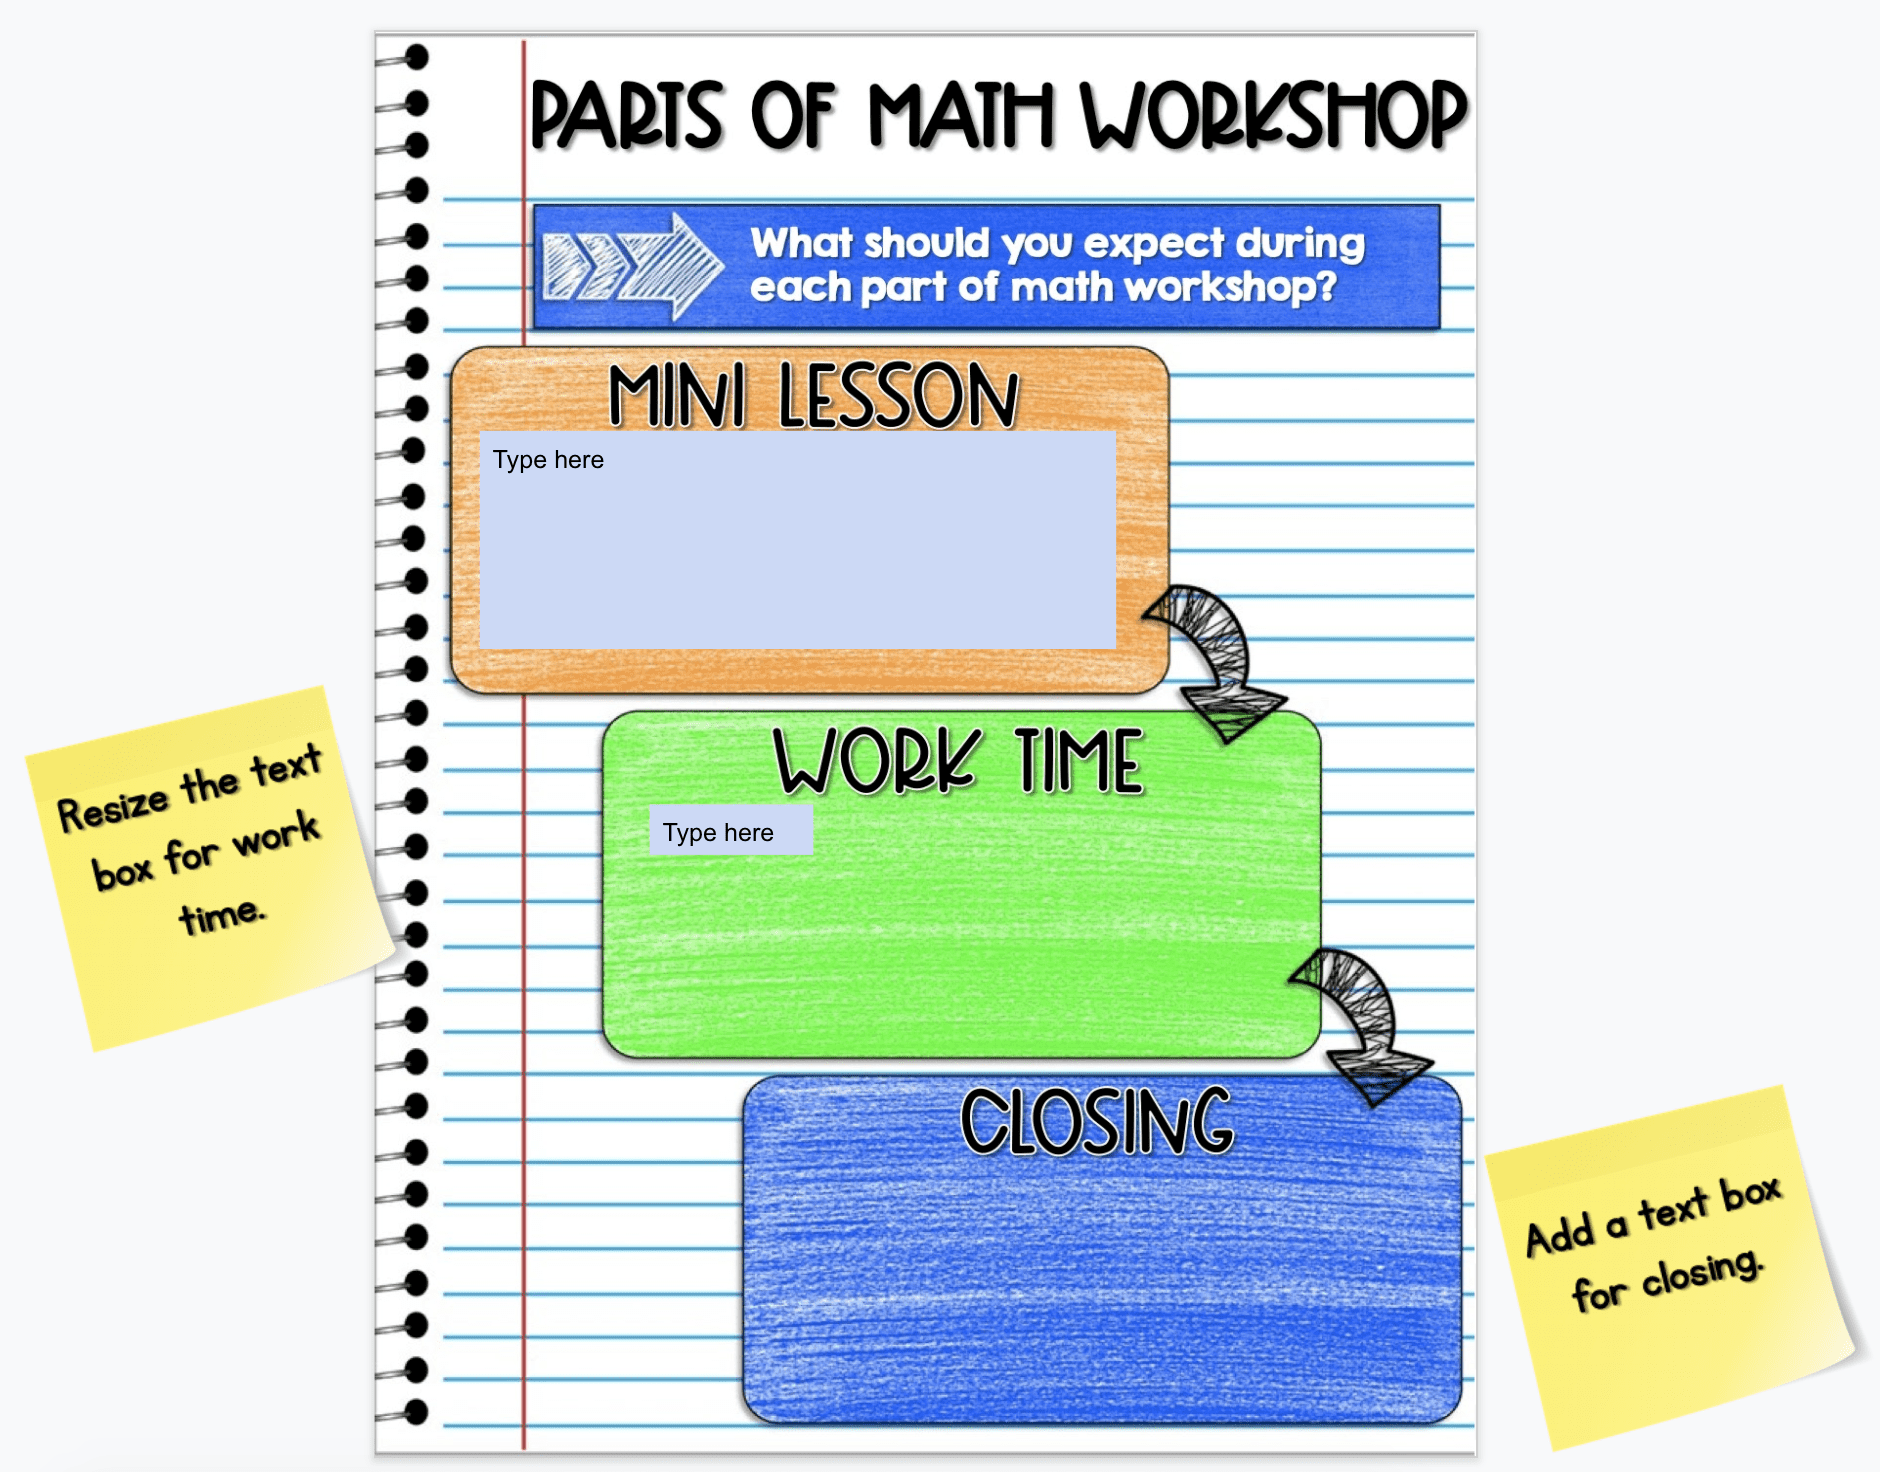 Parts of math workshop interactive worksheet for teaching math procedures